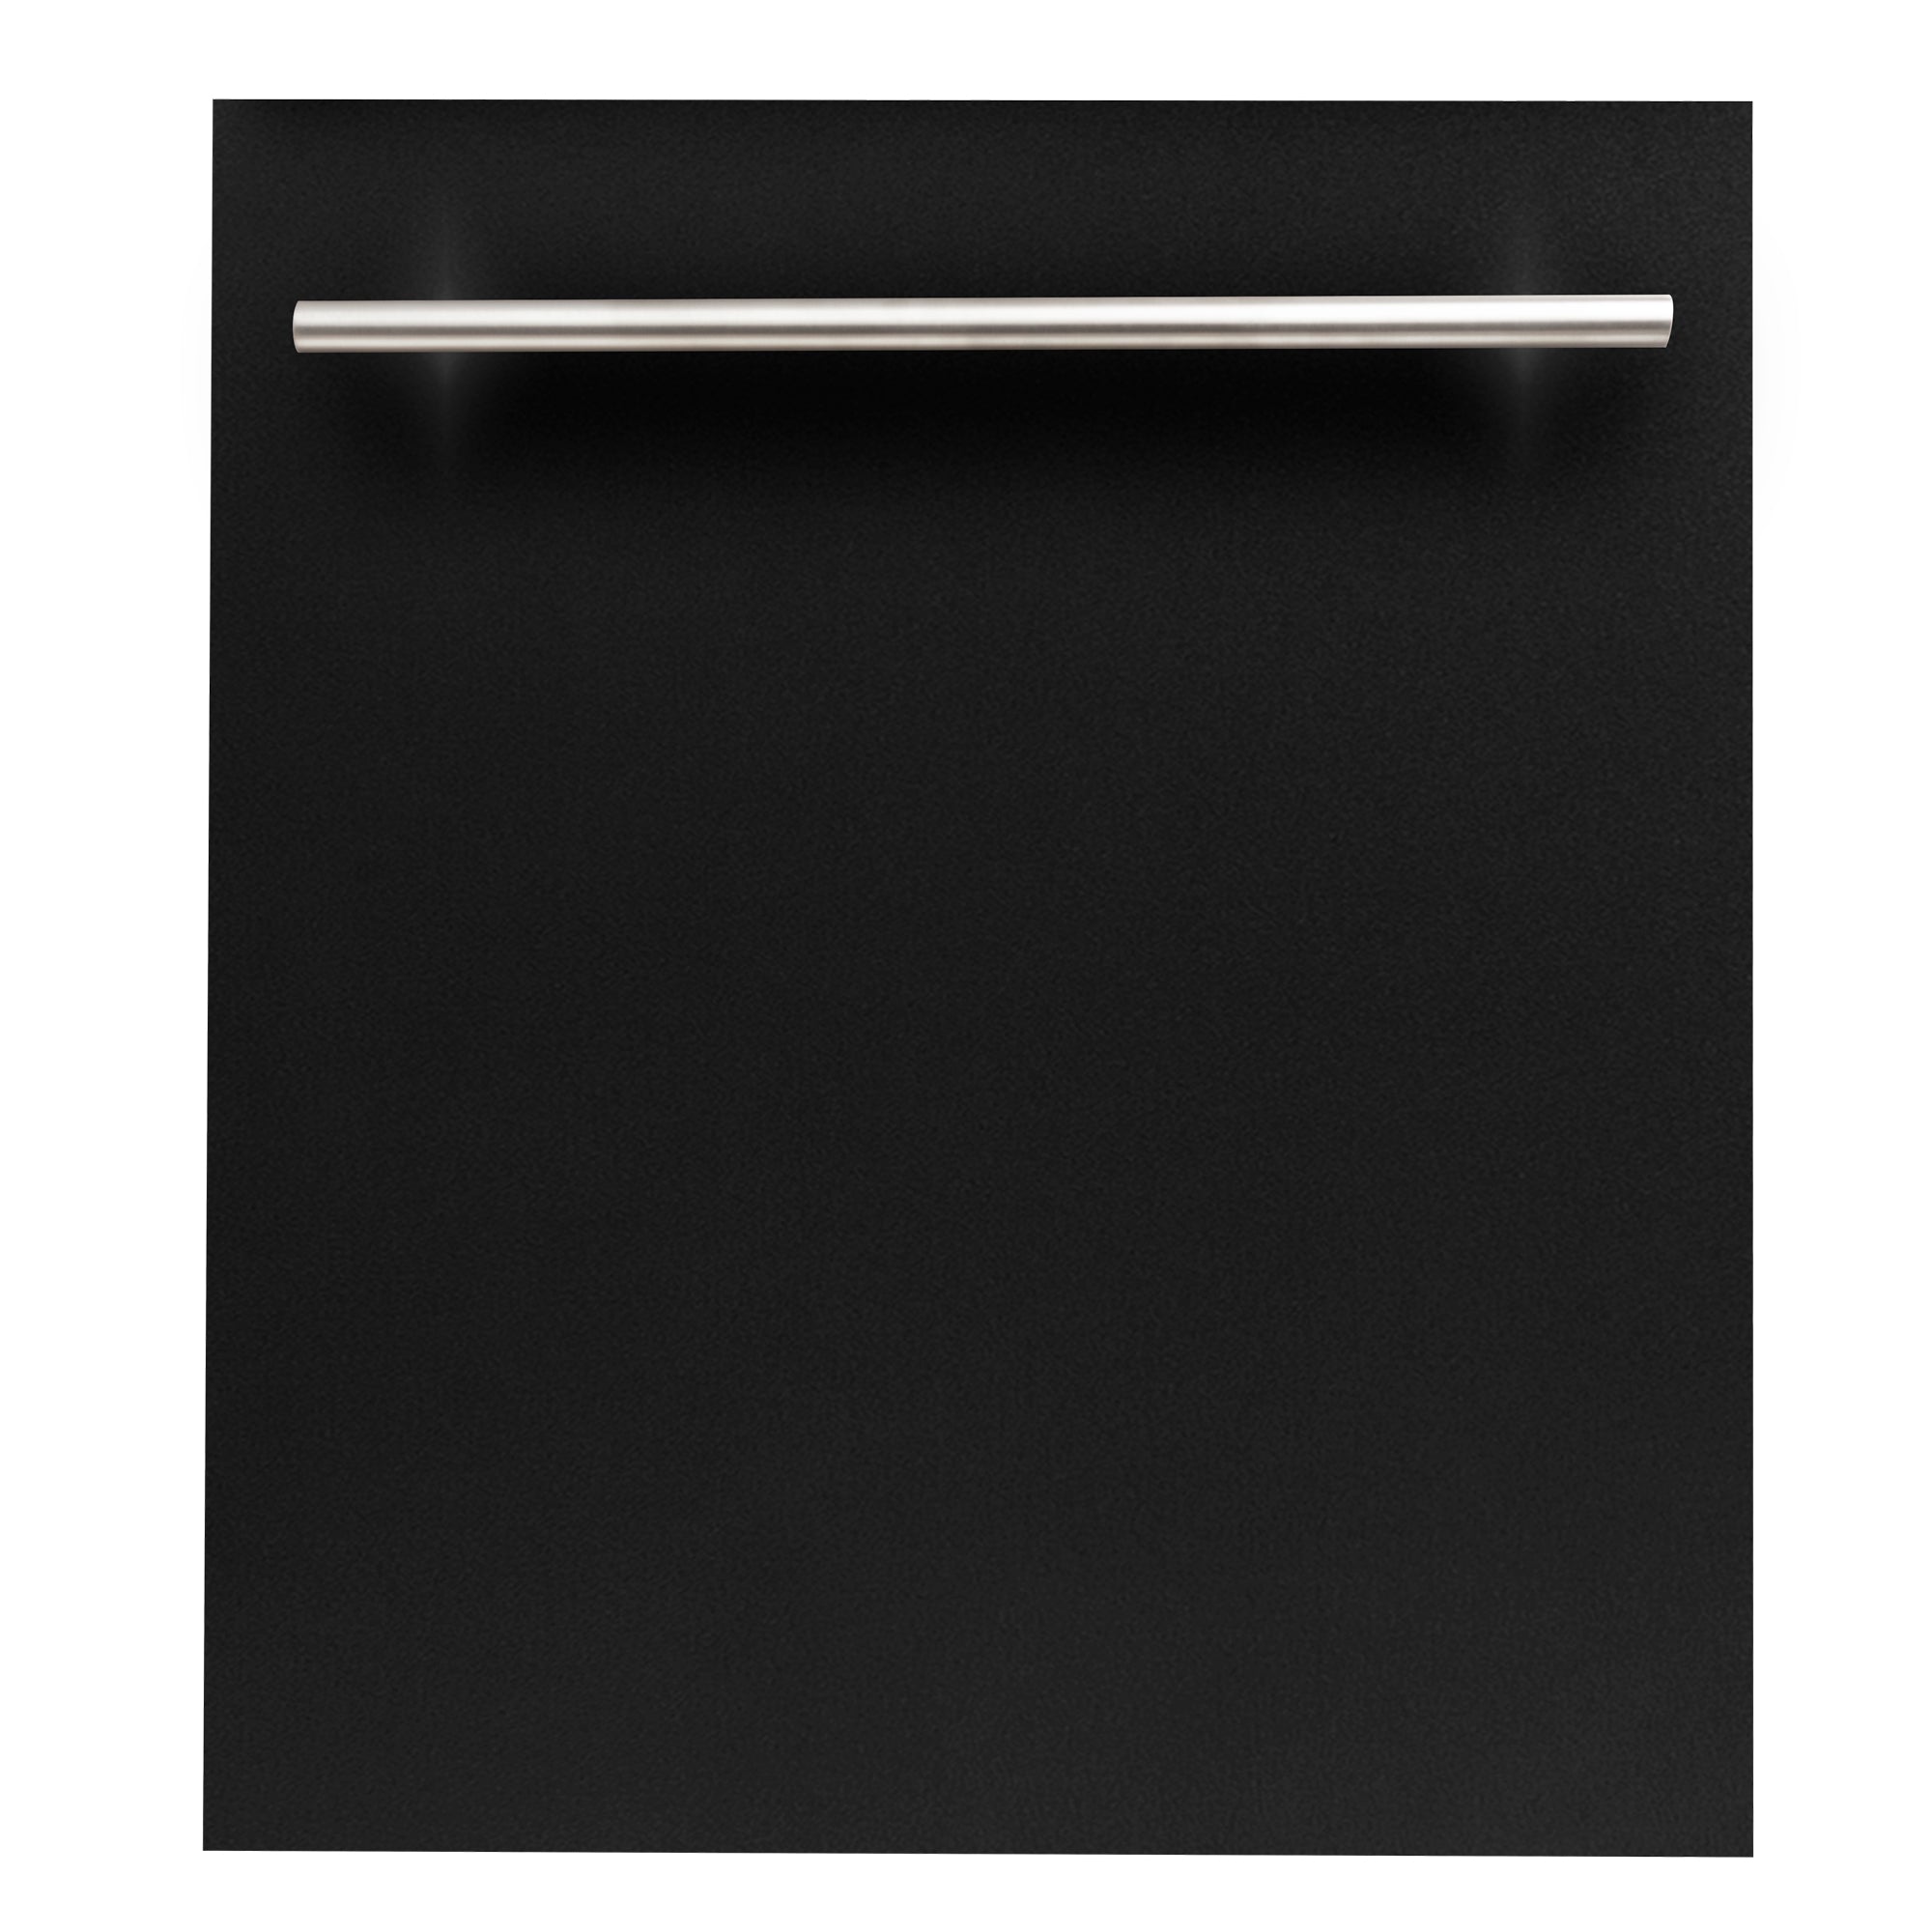 ZLINE 24" Dishwasher Panel in Black Matte with Modern Handle (DP-BLM-H-24)